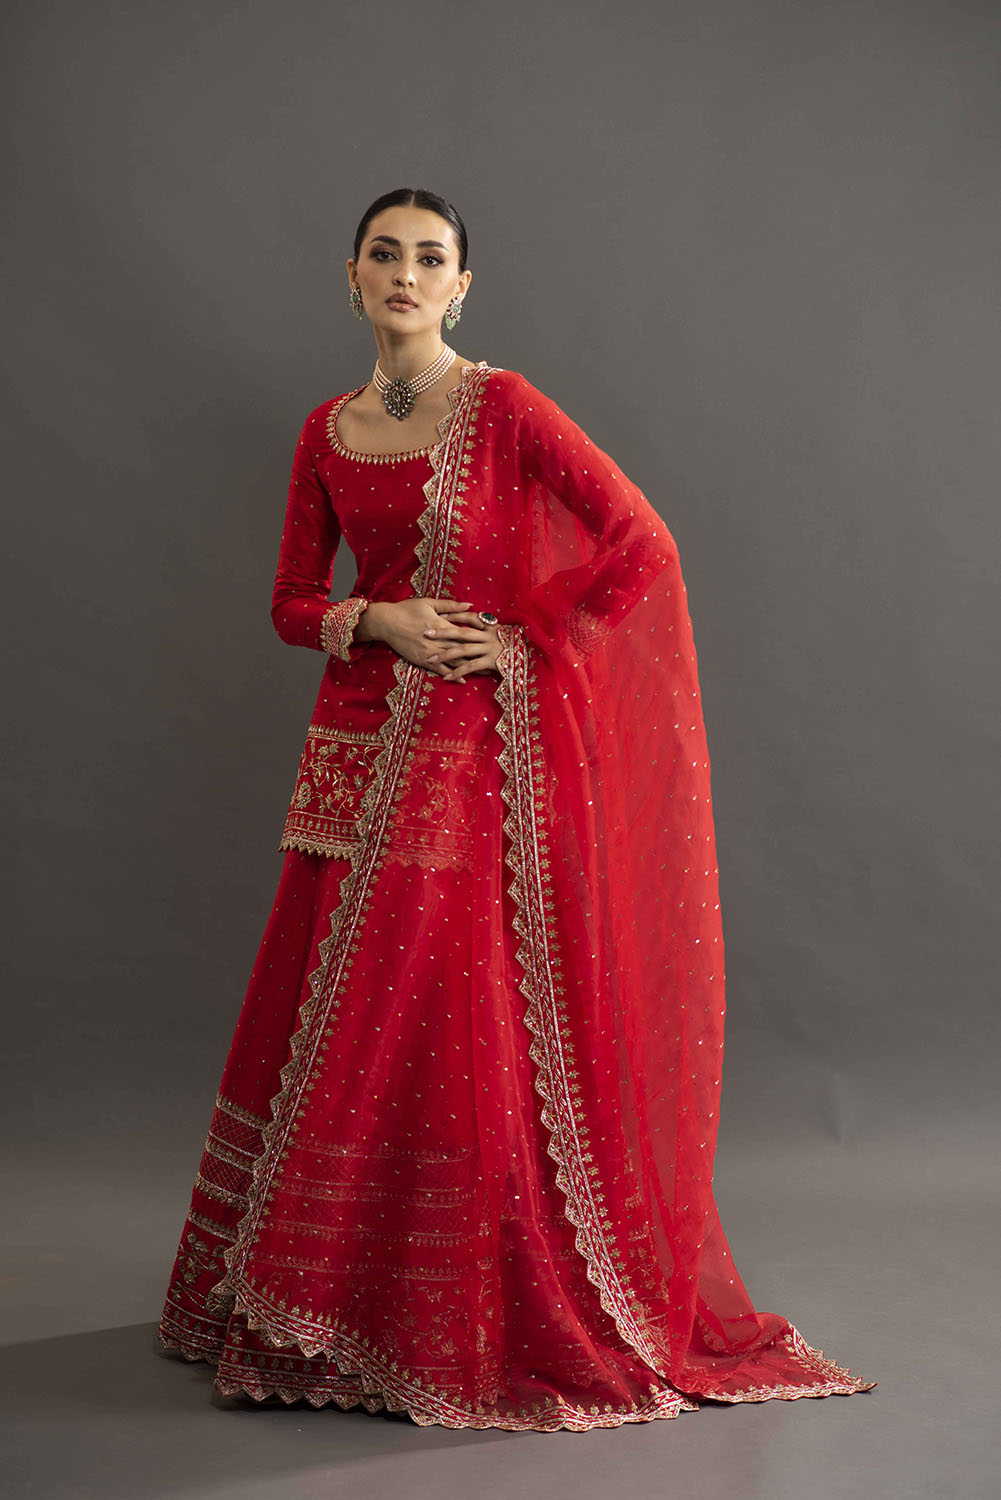 Samantha Ruth Prabhu in Heavy Embroidered Sharara - Red